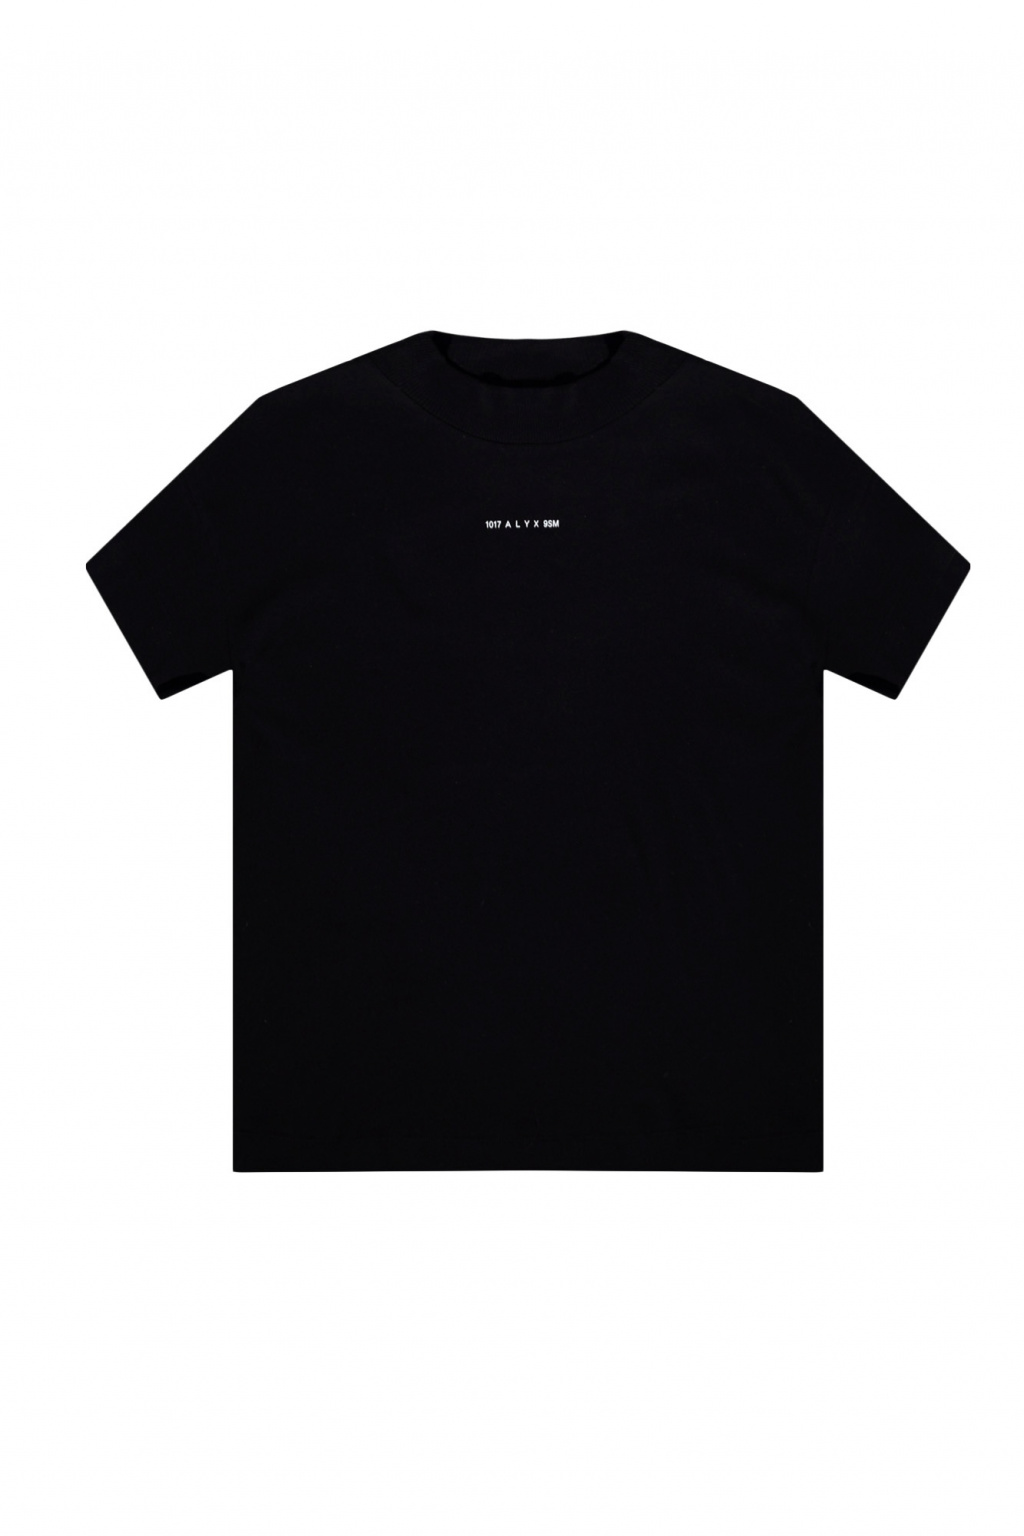 Black Logo T-shirt 1017 ALYX 9SM - Vitkac GB